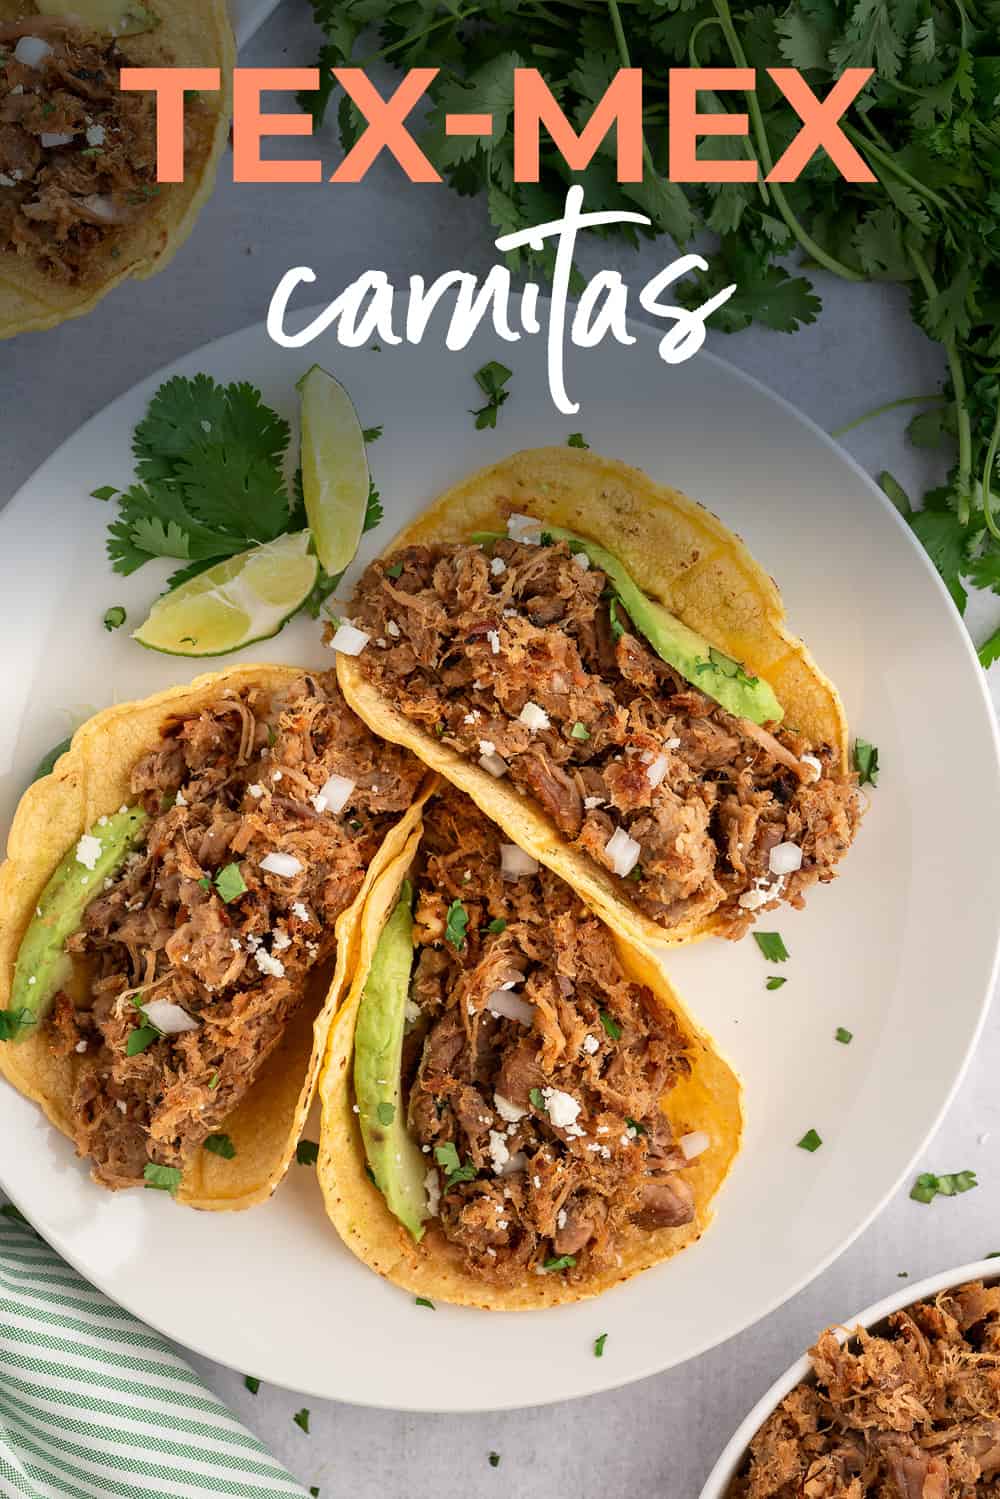 Tex-Mex carnitas tacos on plate.